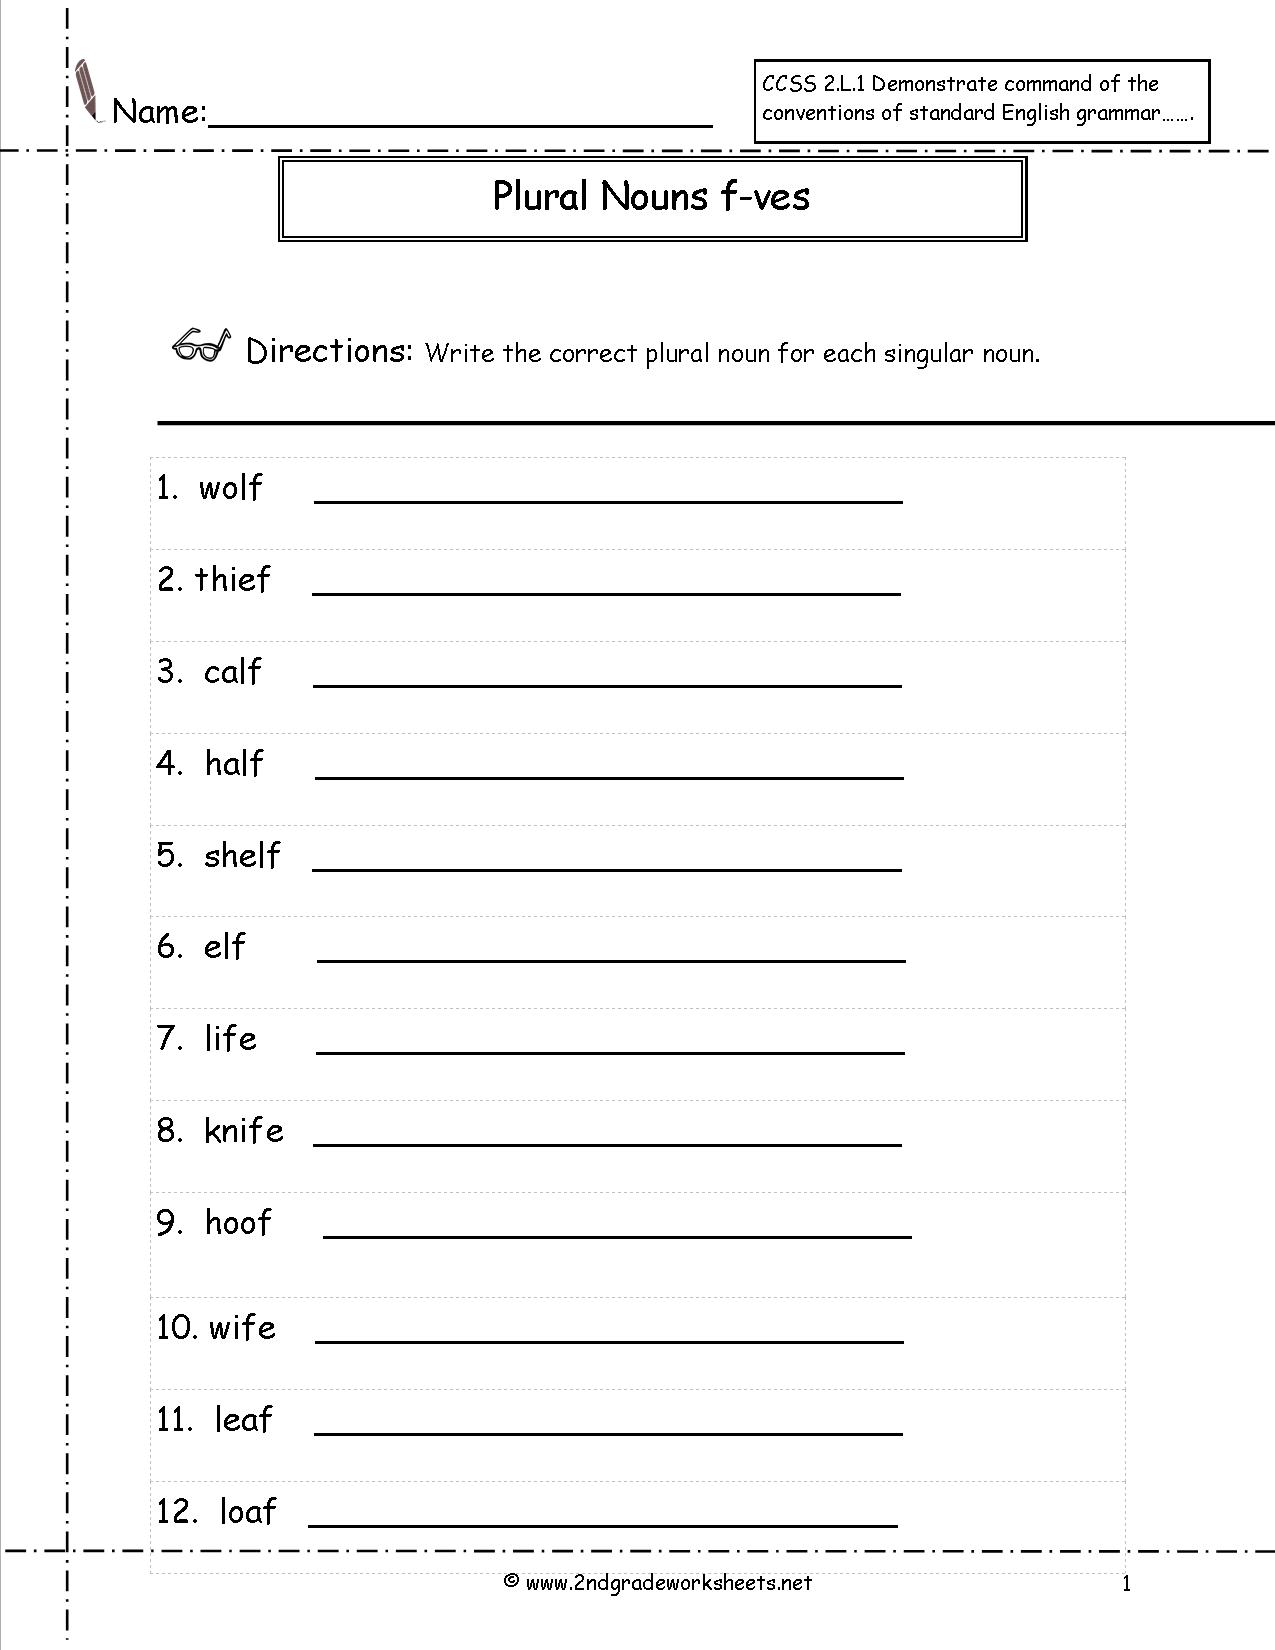 Singular and Plural Nouns Worksheets